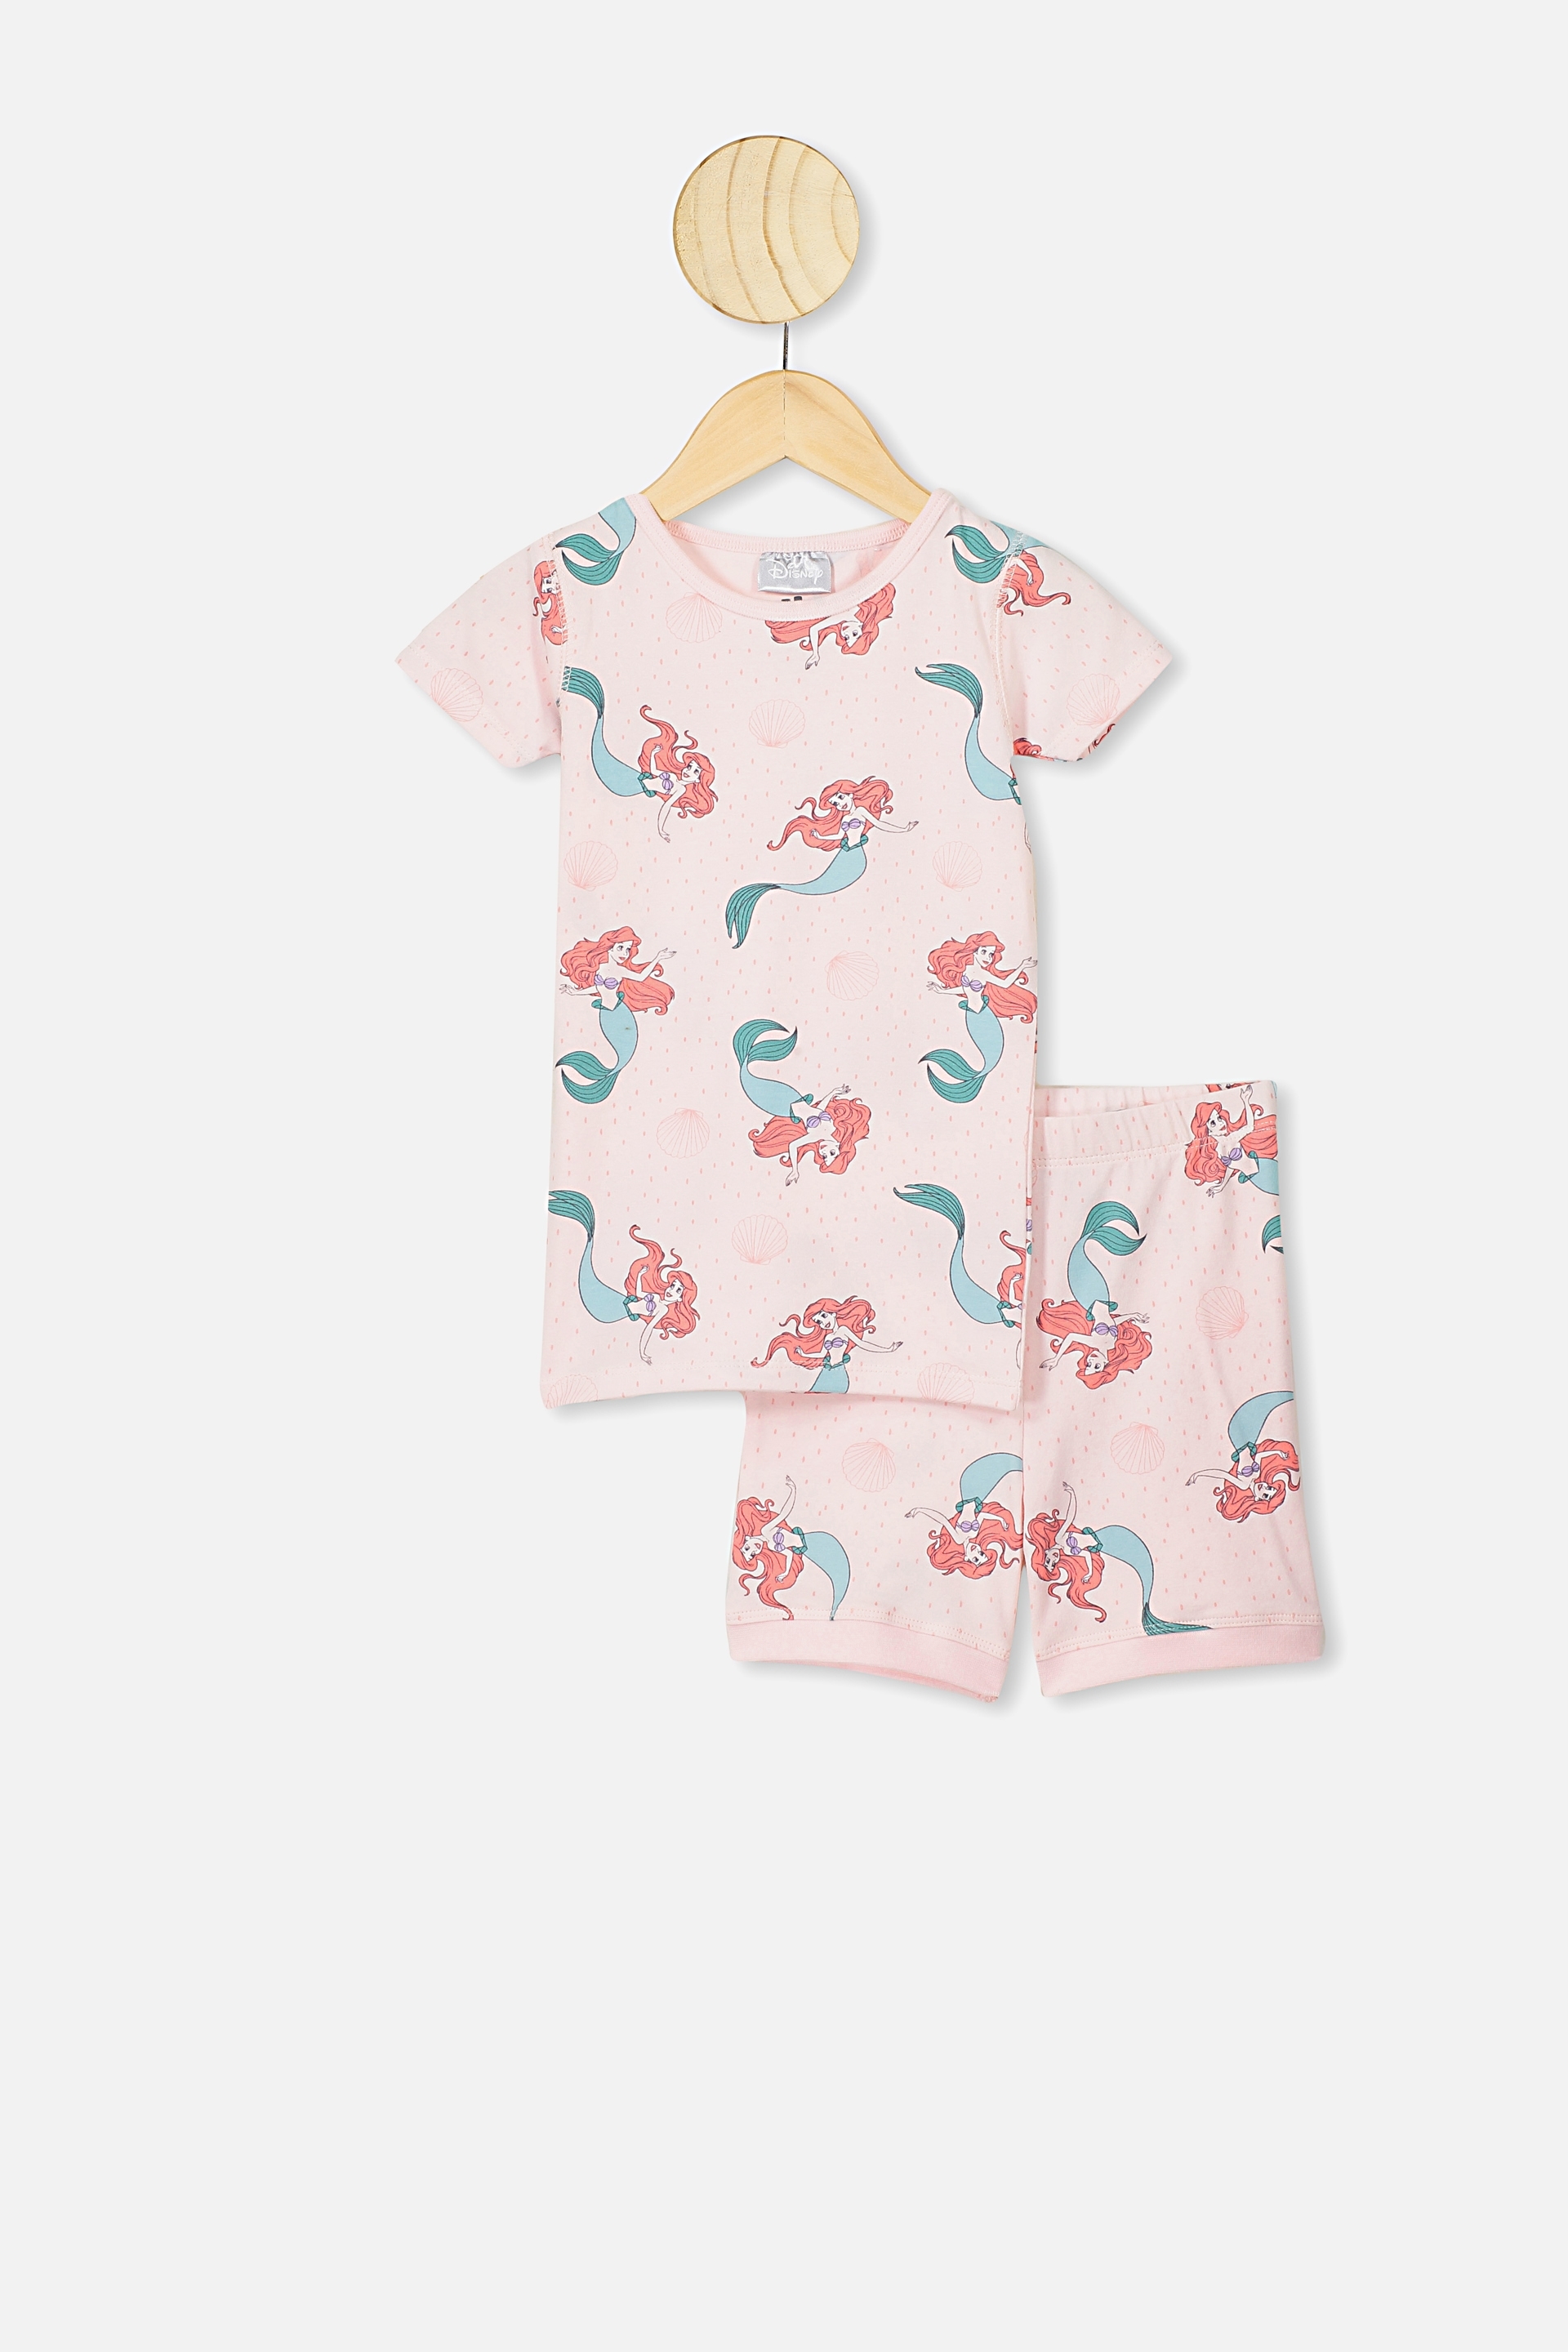 Girls Kids Children Pink Mermaid Short sleeves Pajama pants set Sleepwear gift